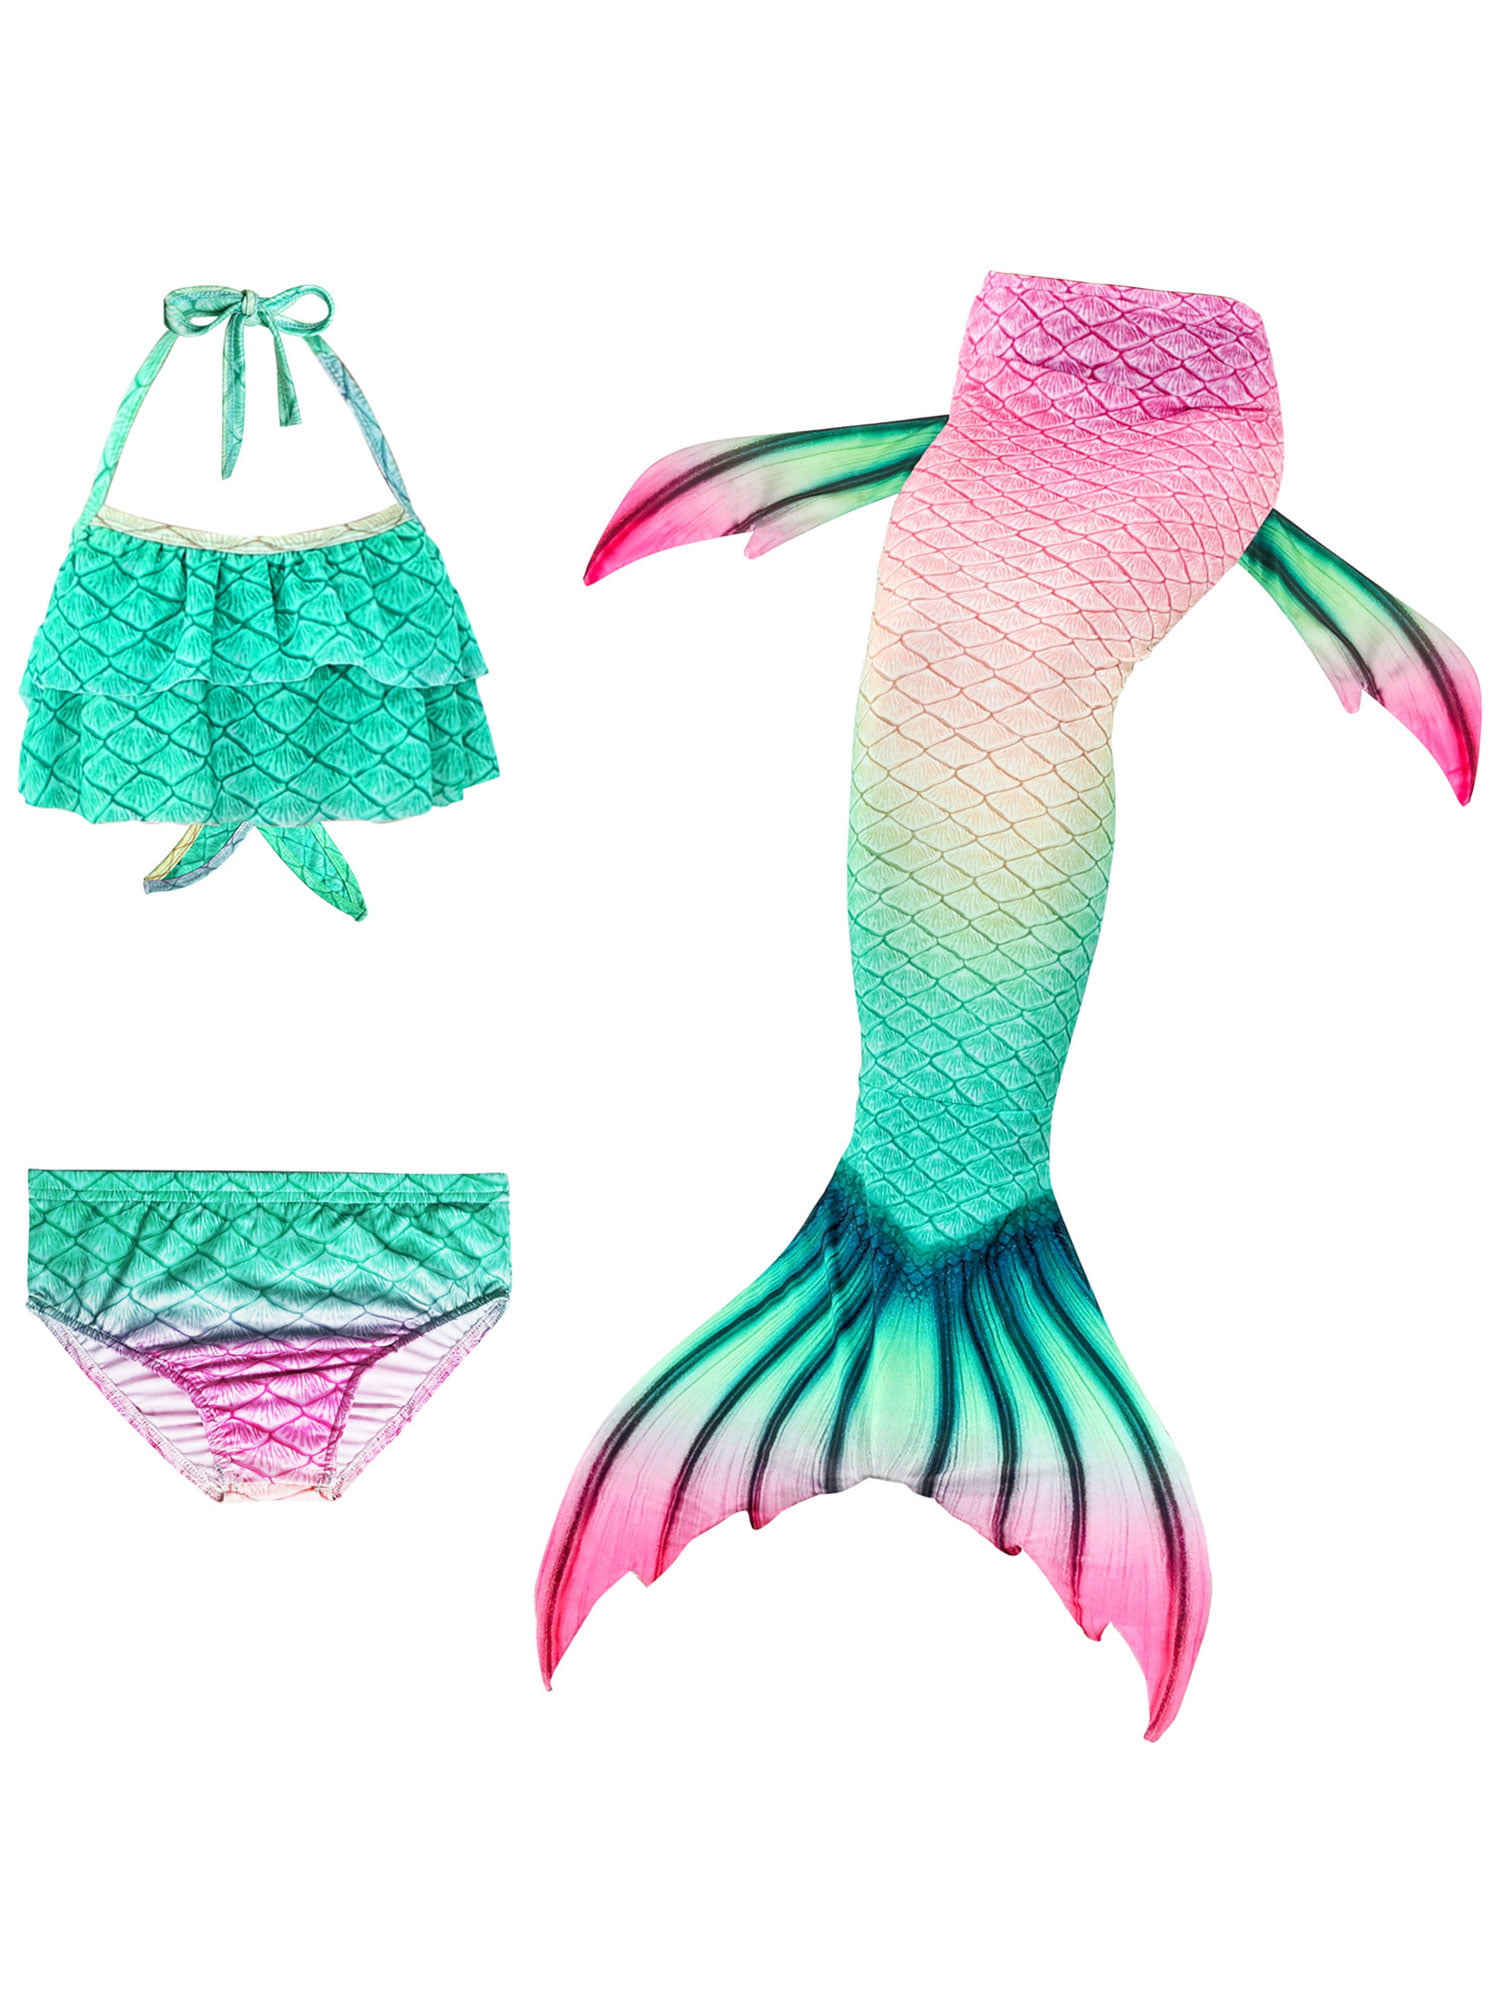 Bikini Swimsuit Set Mermaid Tails Birthday Gifts for Kids 2019 3 Pcs Mermaid Tails for Swimming for Girls Can Add Monofin